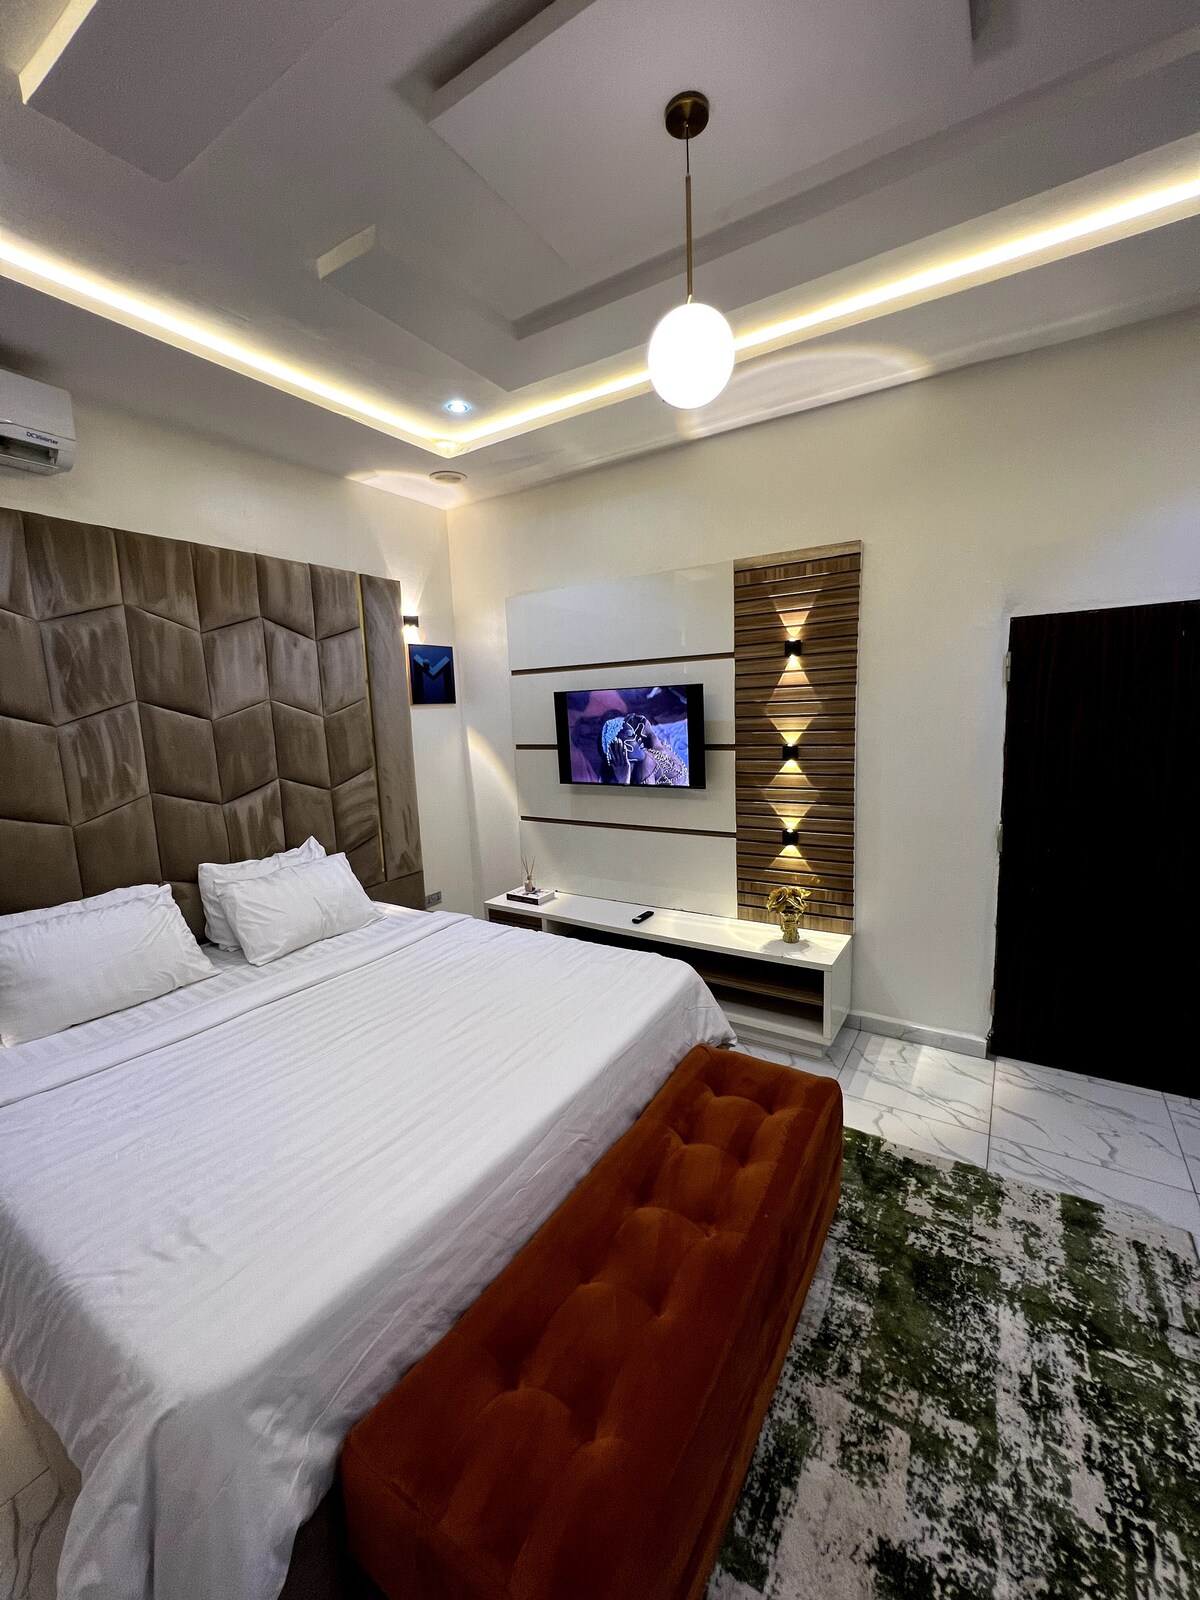 3 Bedroom Serviced Apartment Shortlet, Lekki-Lagos